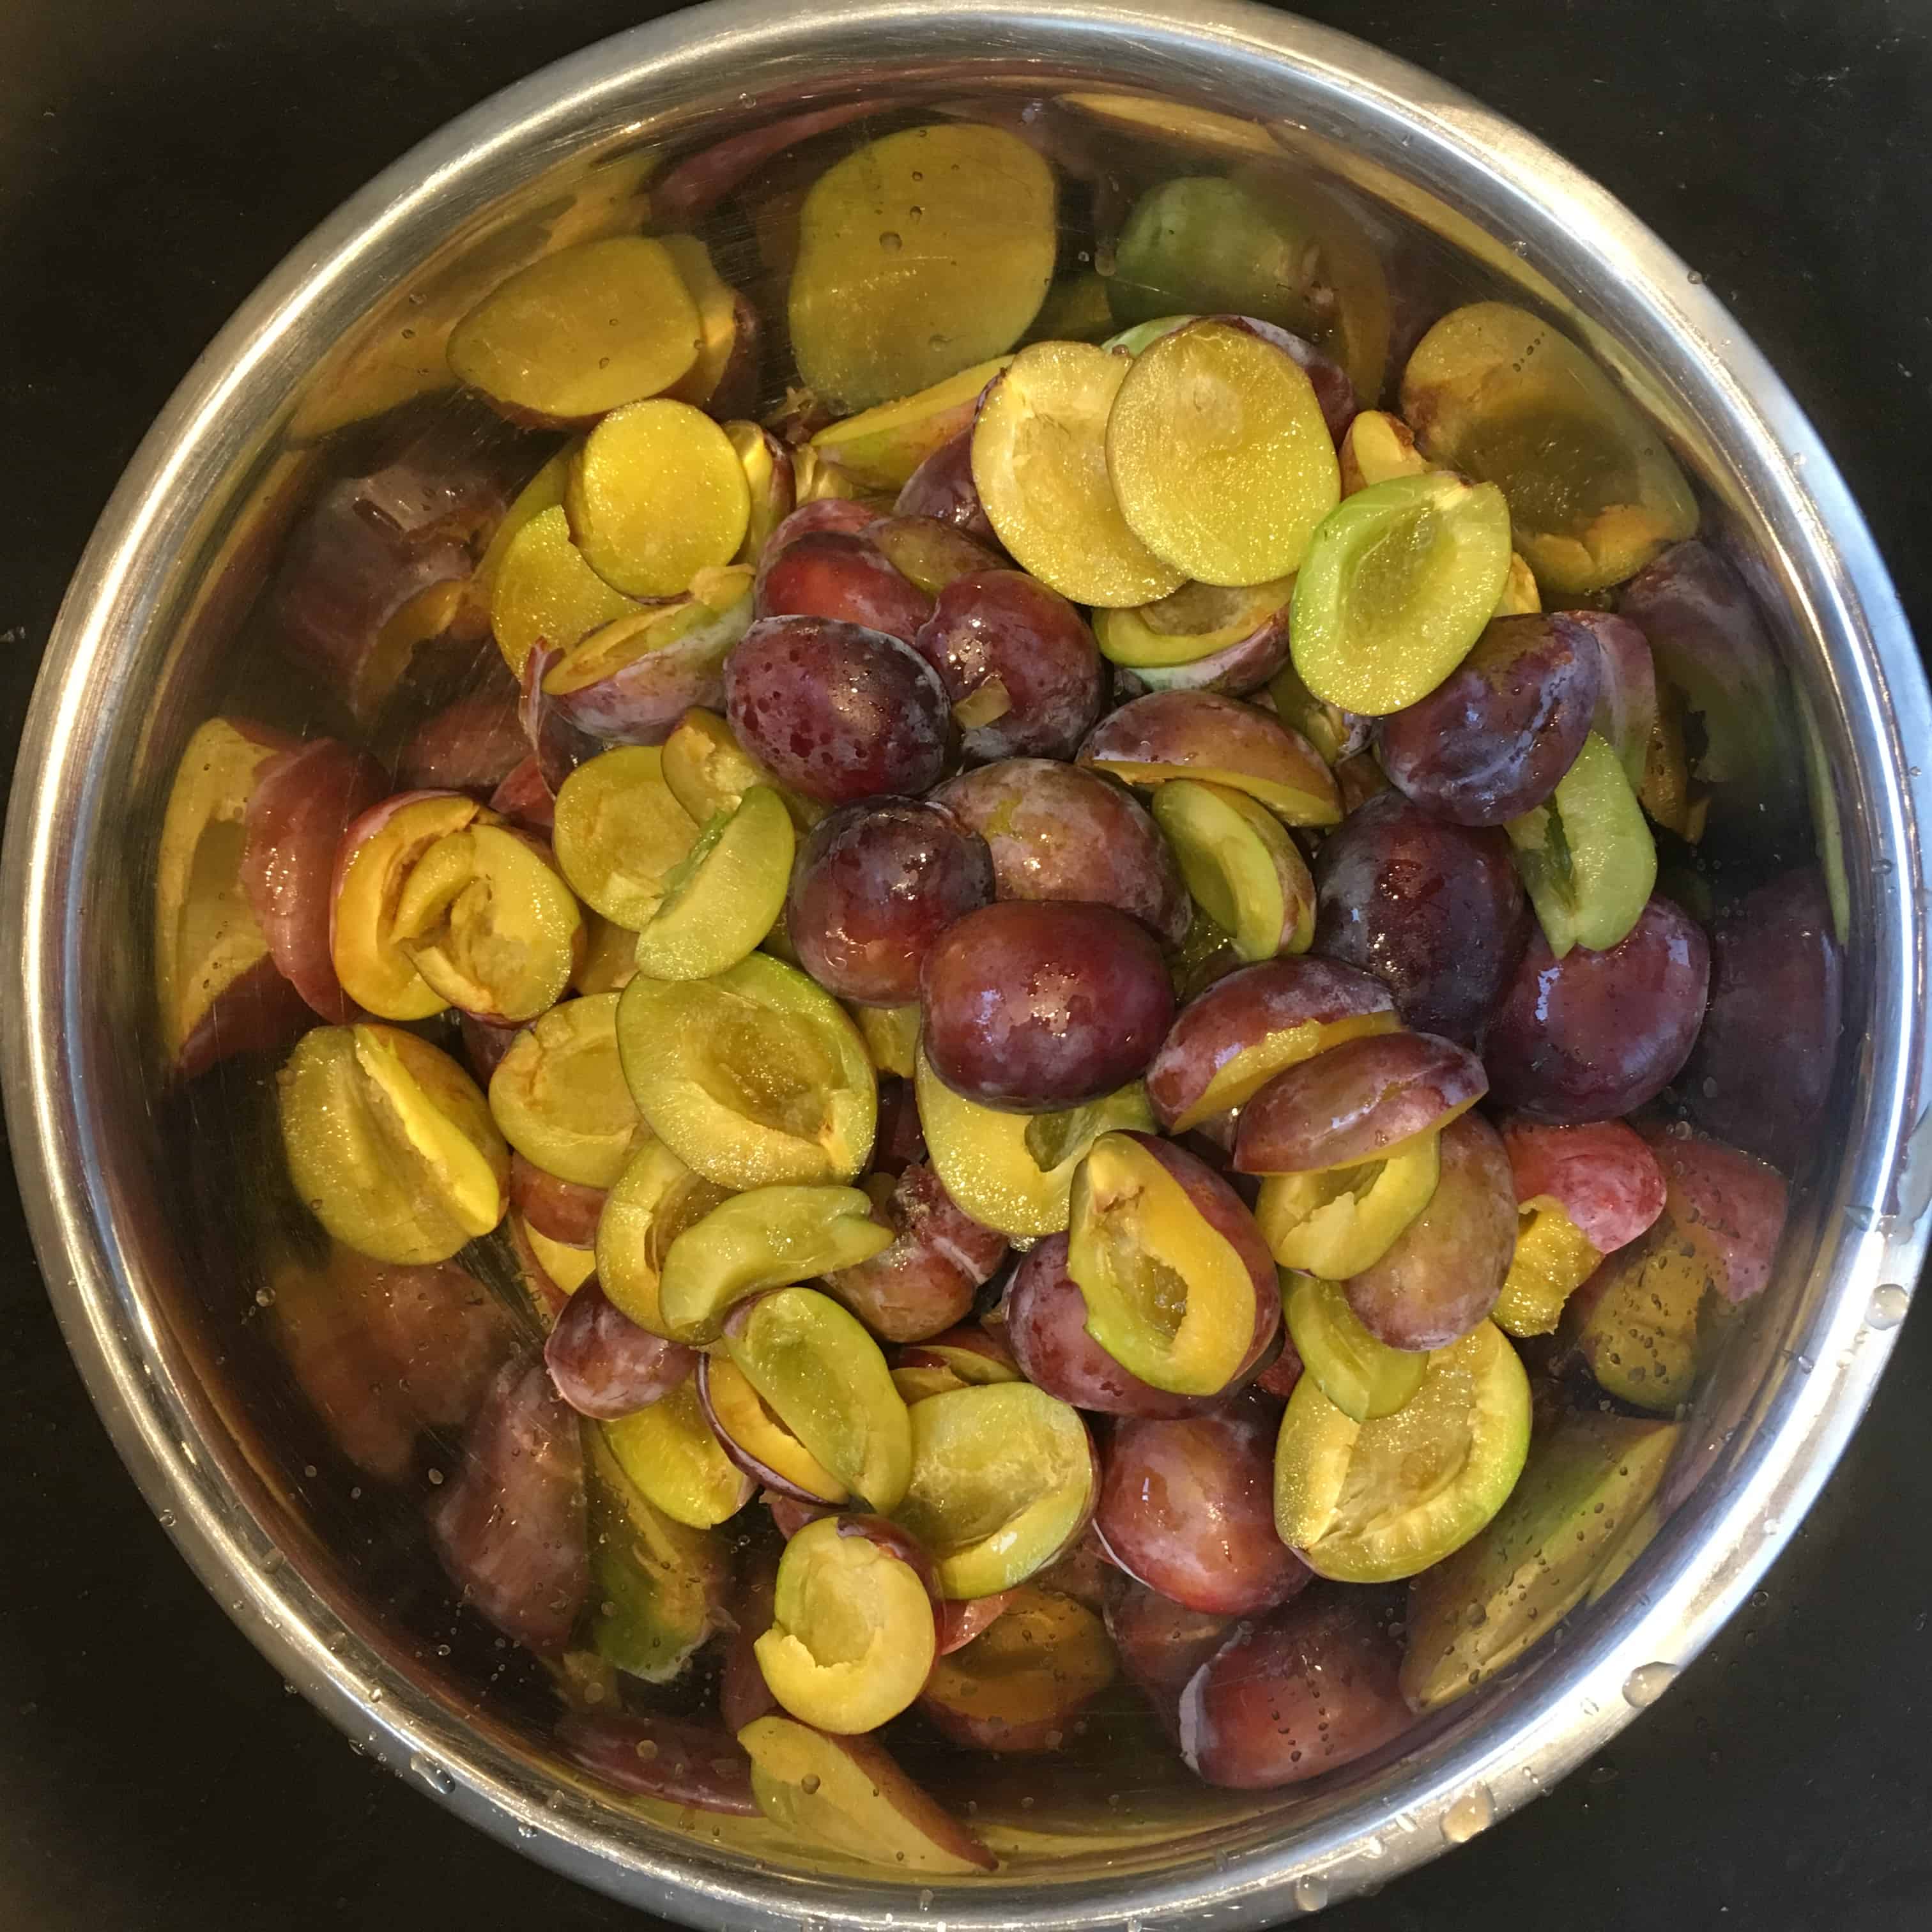 Halved Italian plums. https://trimazing.com